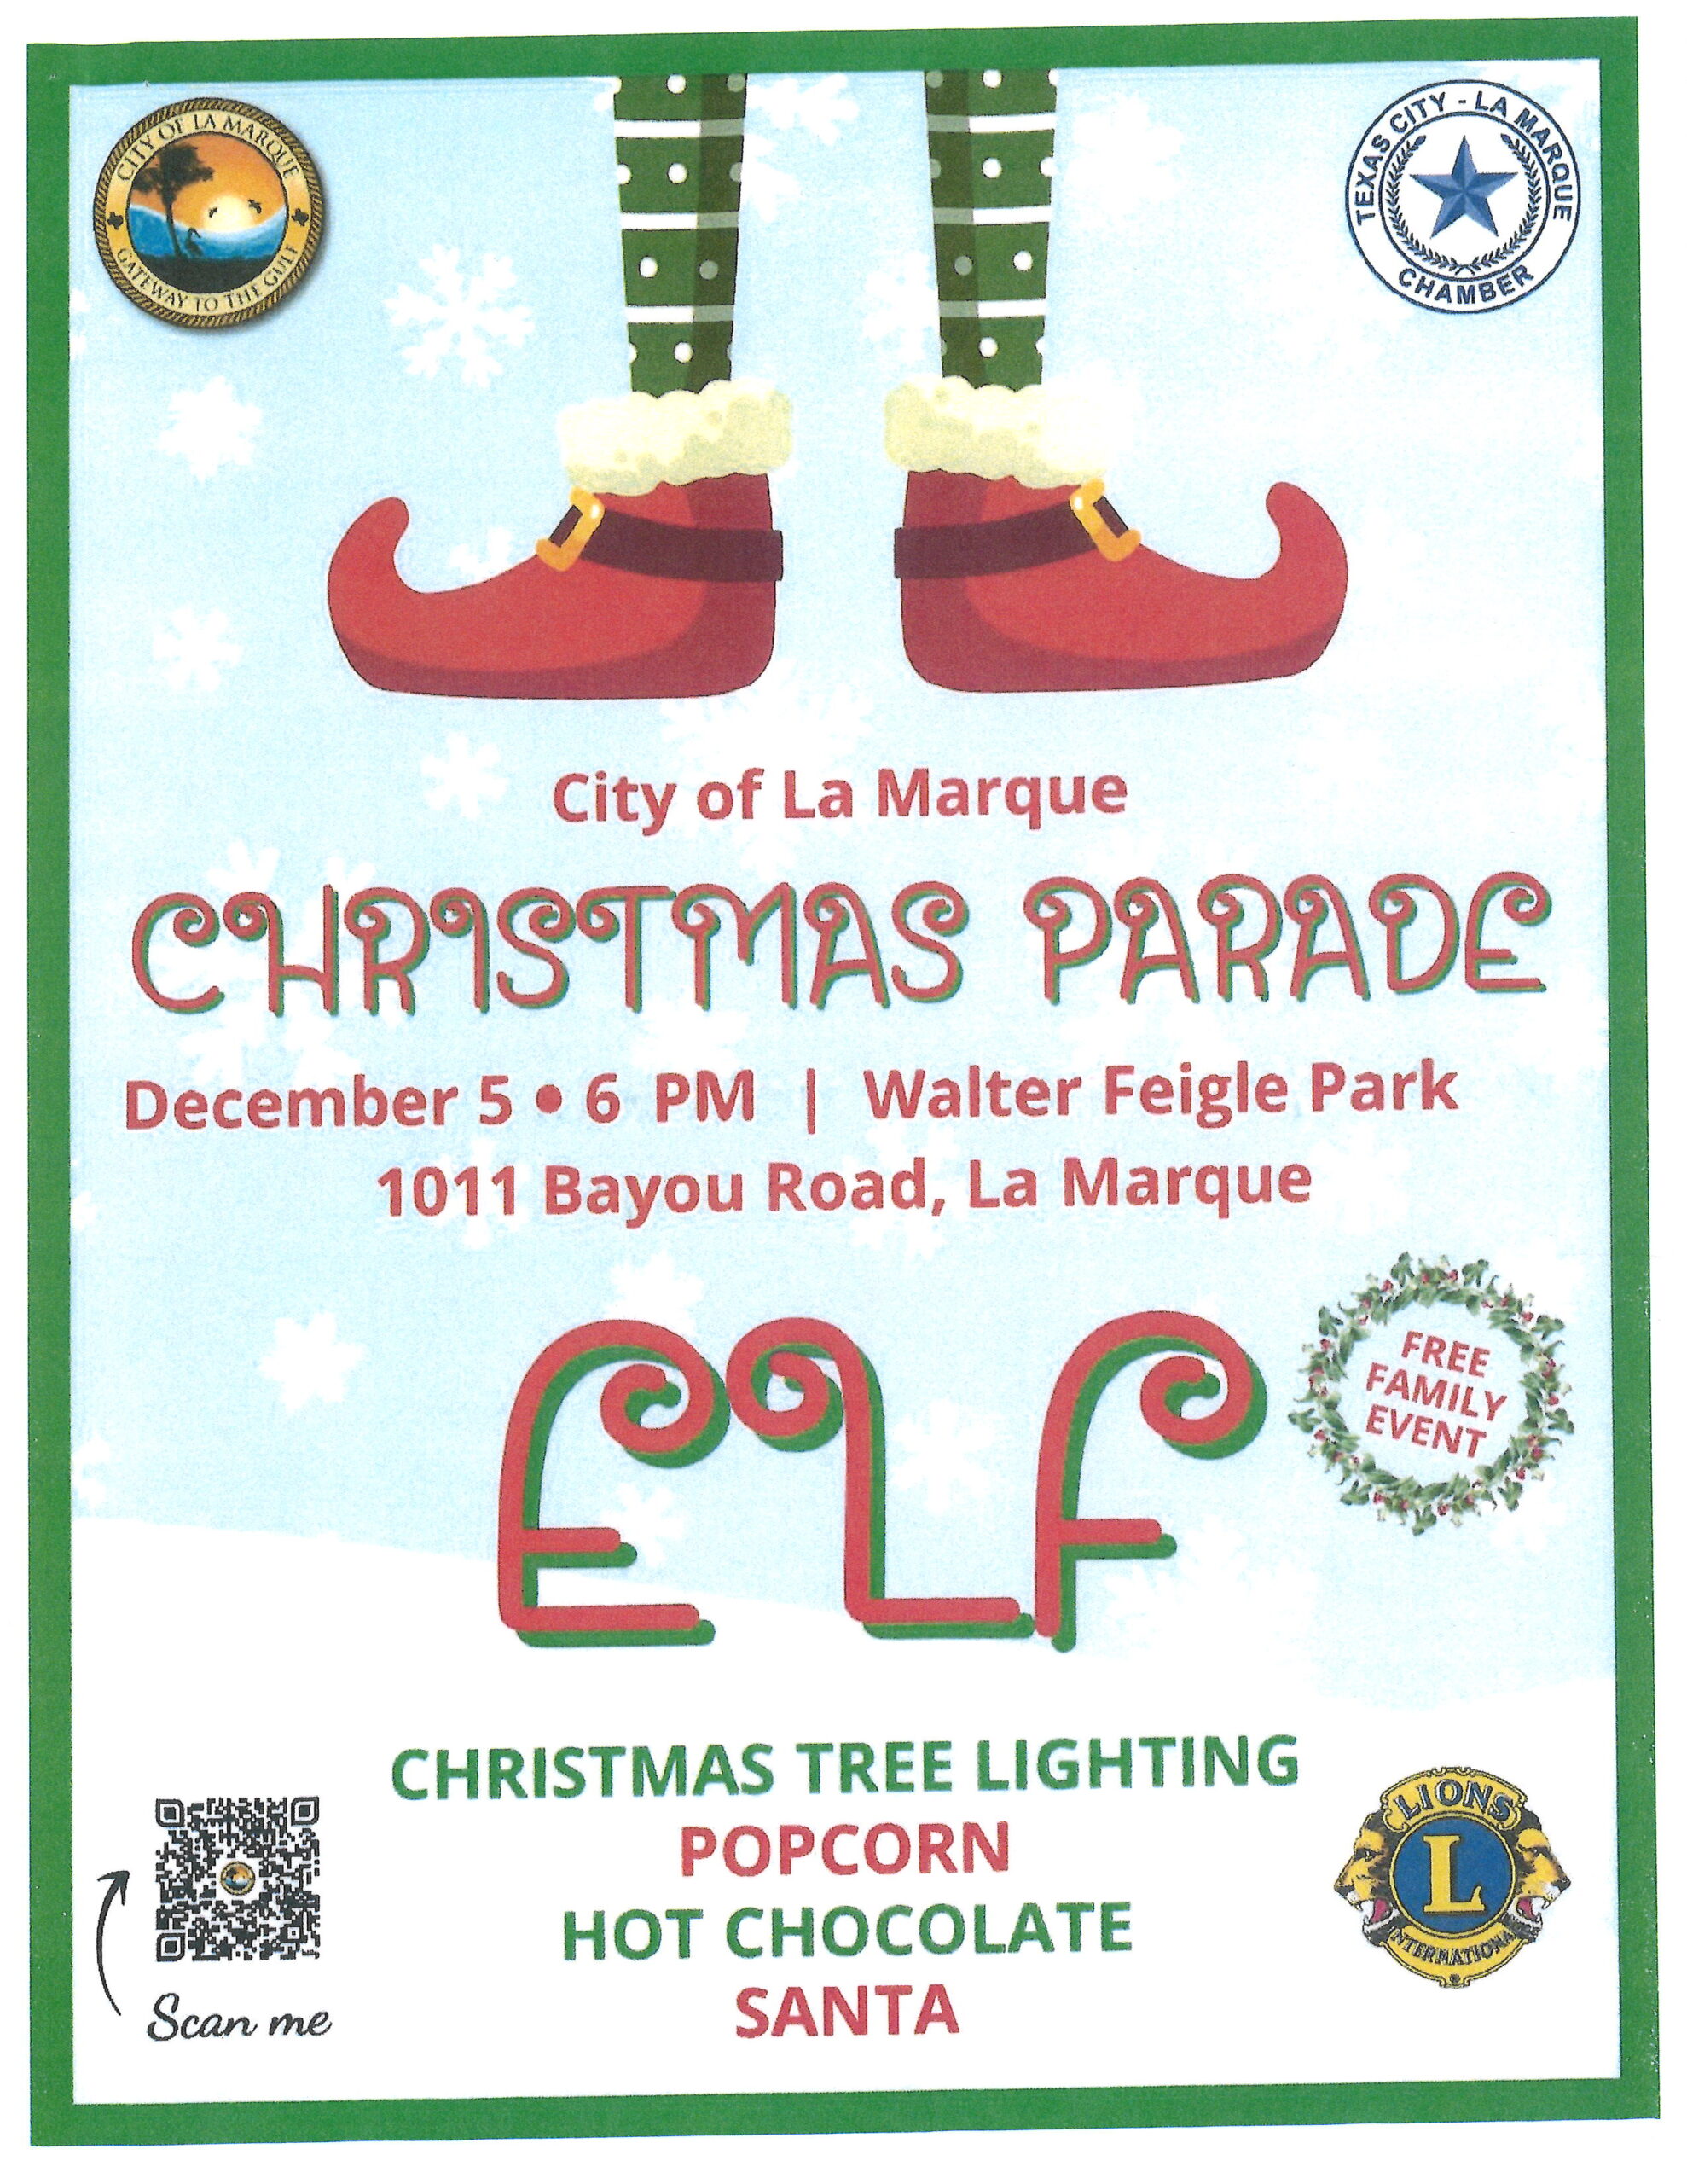 City of La Marque Christmas Parade December 5-6 PM | Walter Feigle Park | 1011 Bayou Road, La Marque ELF Christmas Tree Lighting Popcorn Hot Chocolate Santa